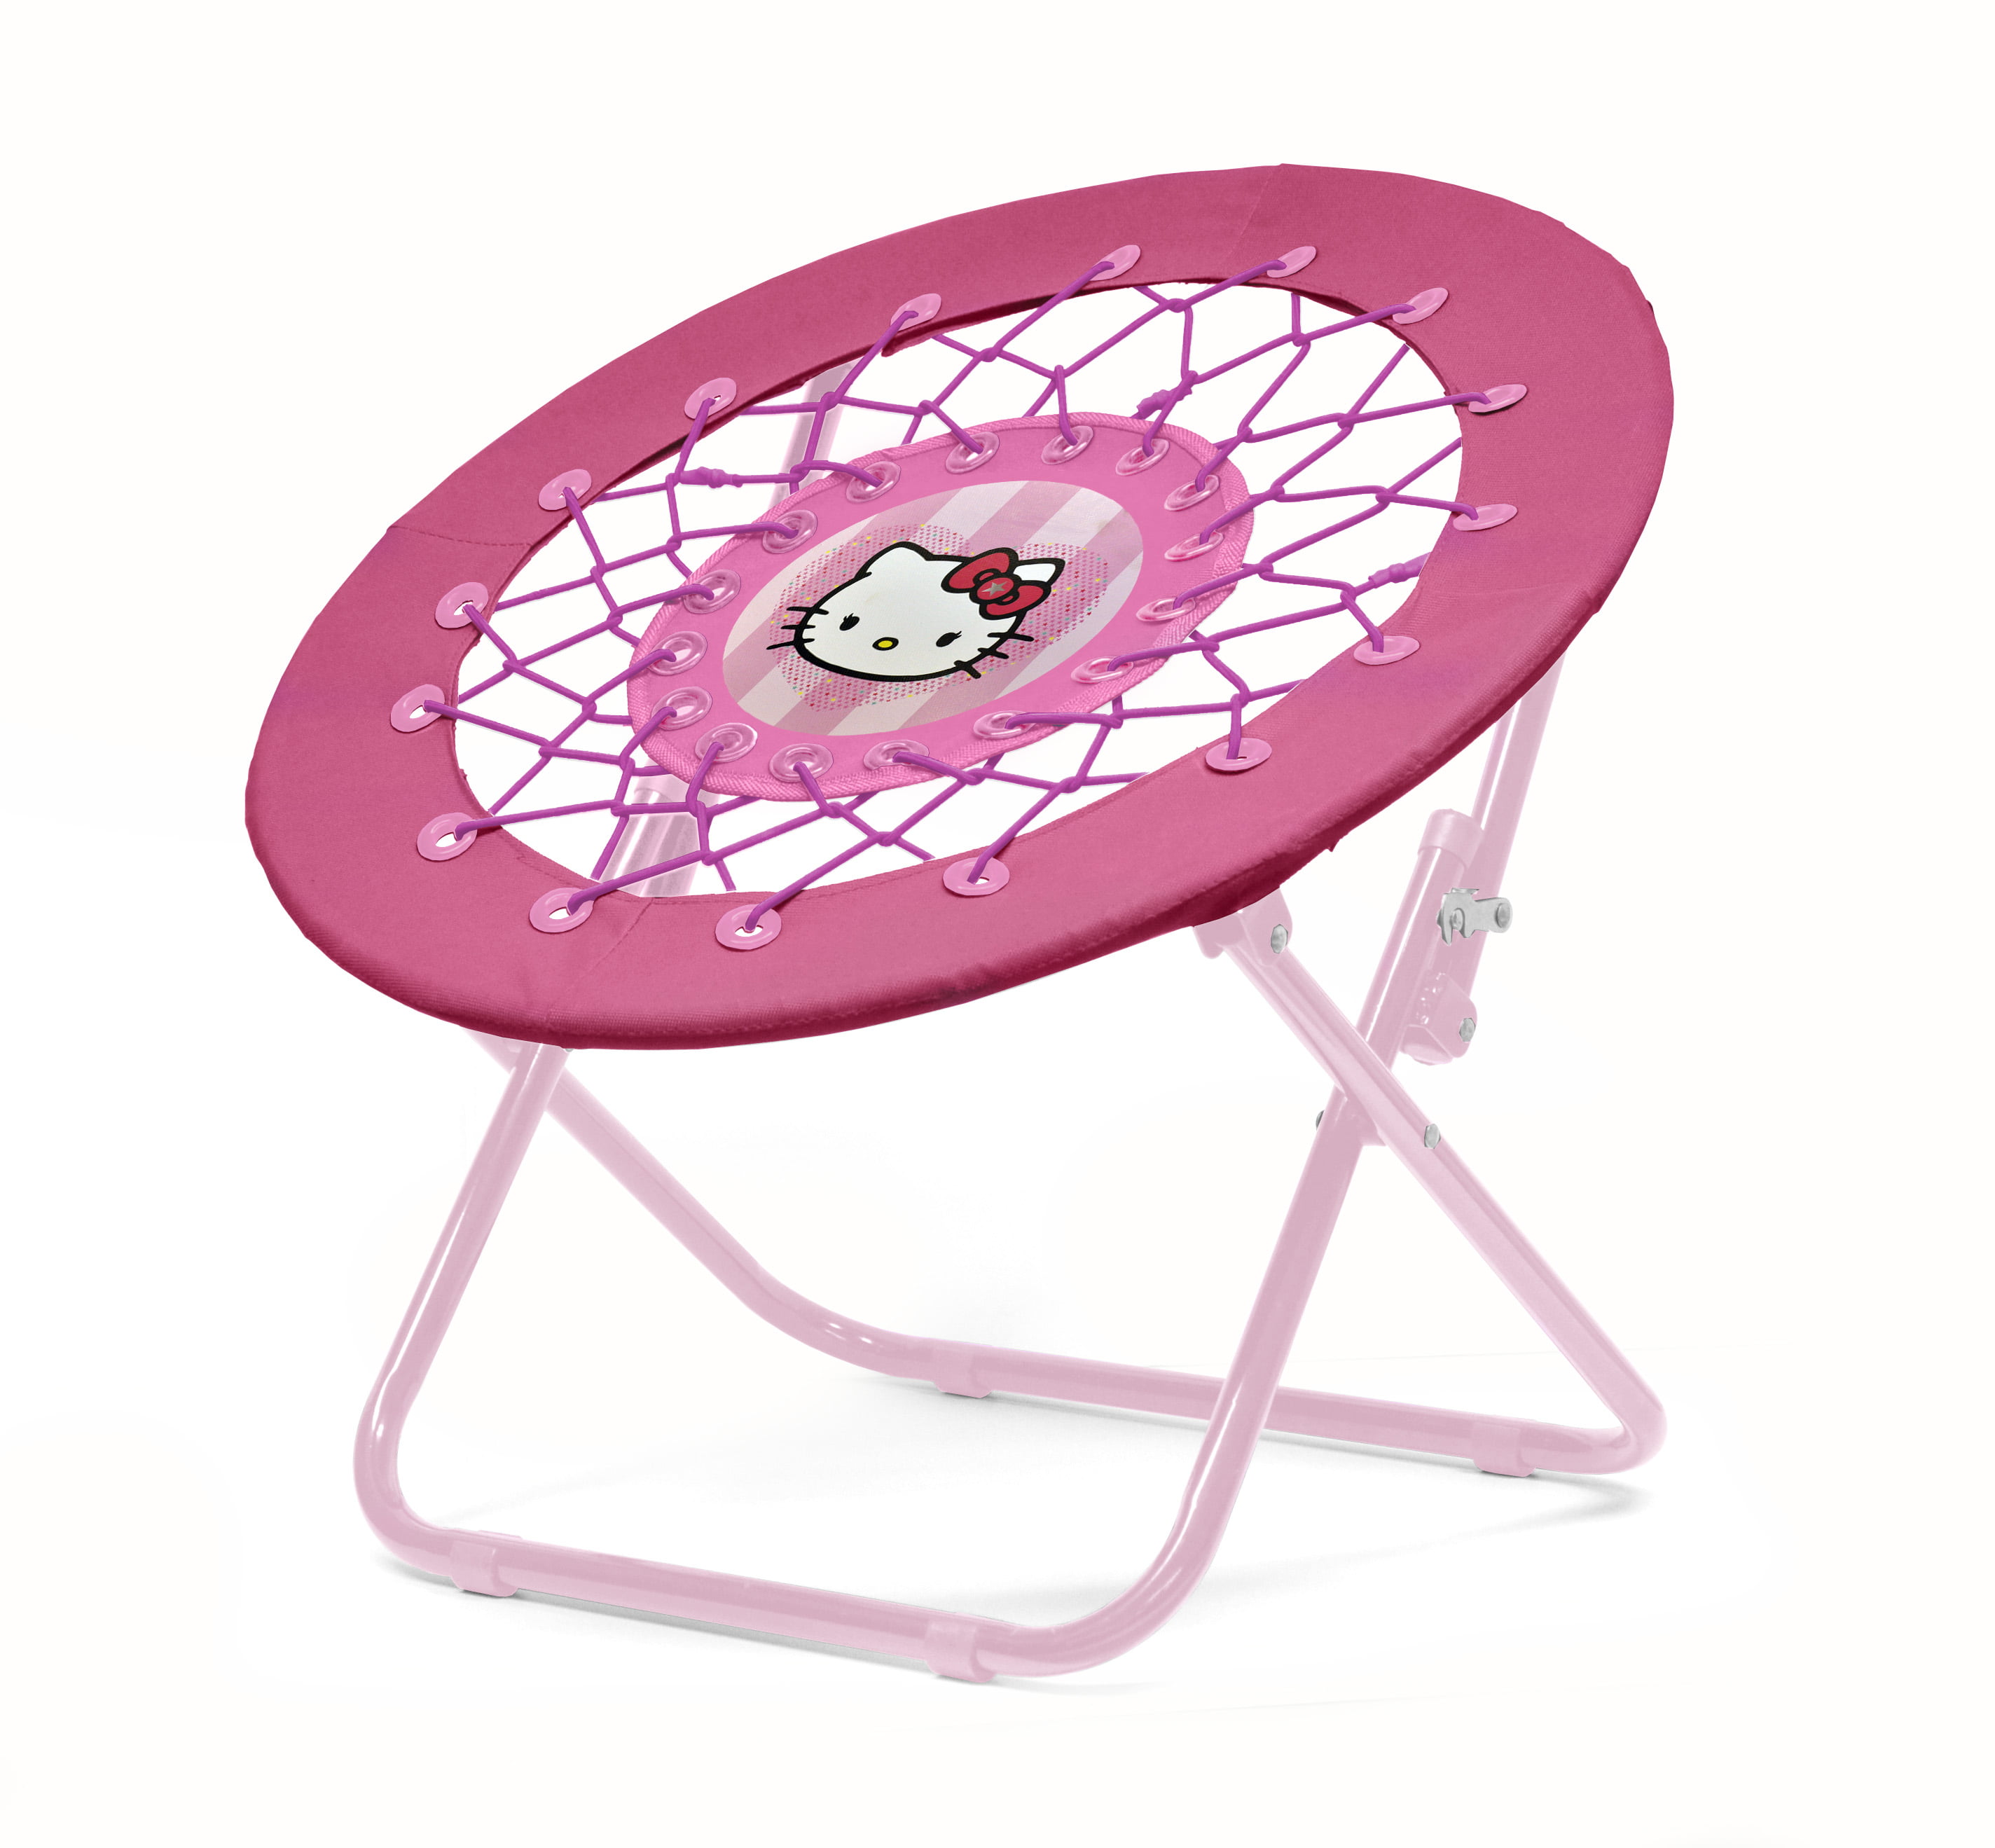 New Sanrio Hello Kitty Pink Big Face Car Truck Seat Cushion Office Chair